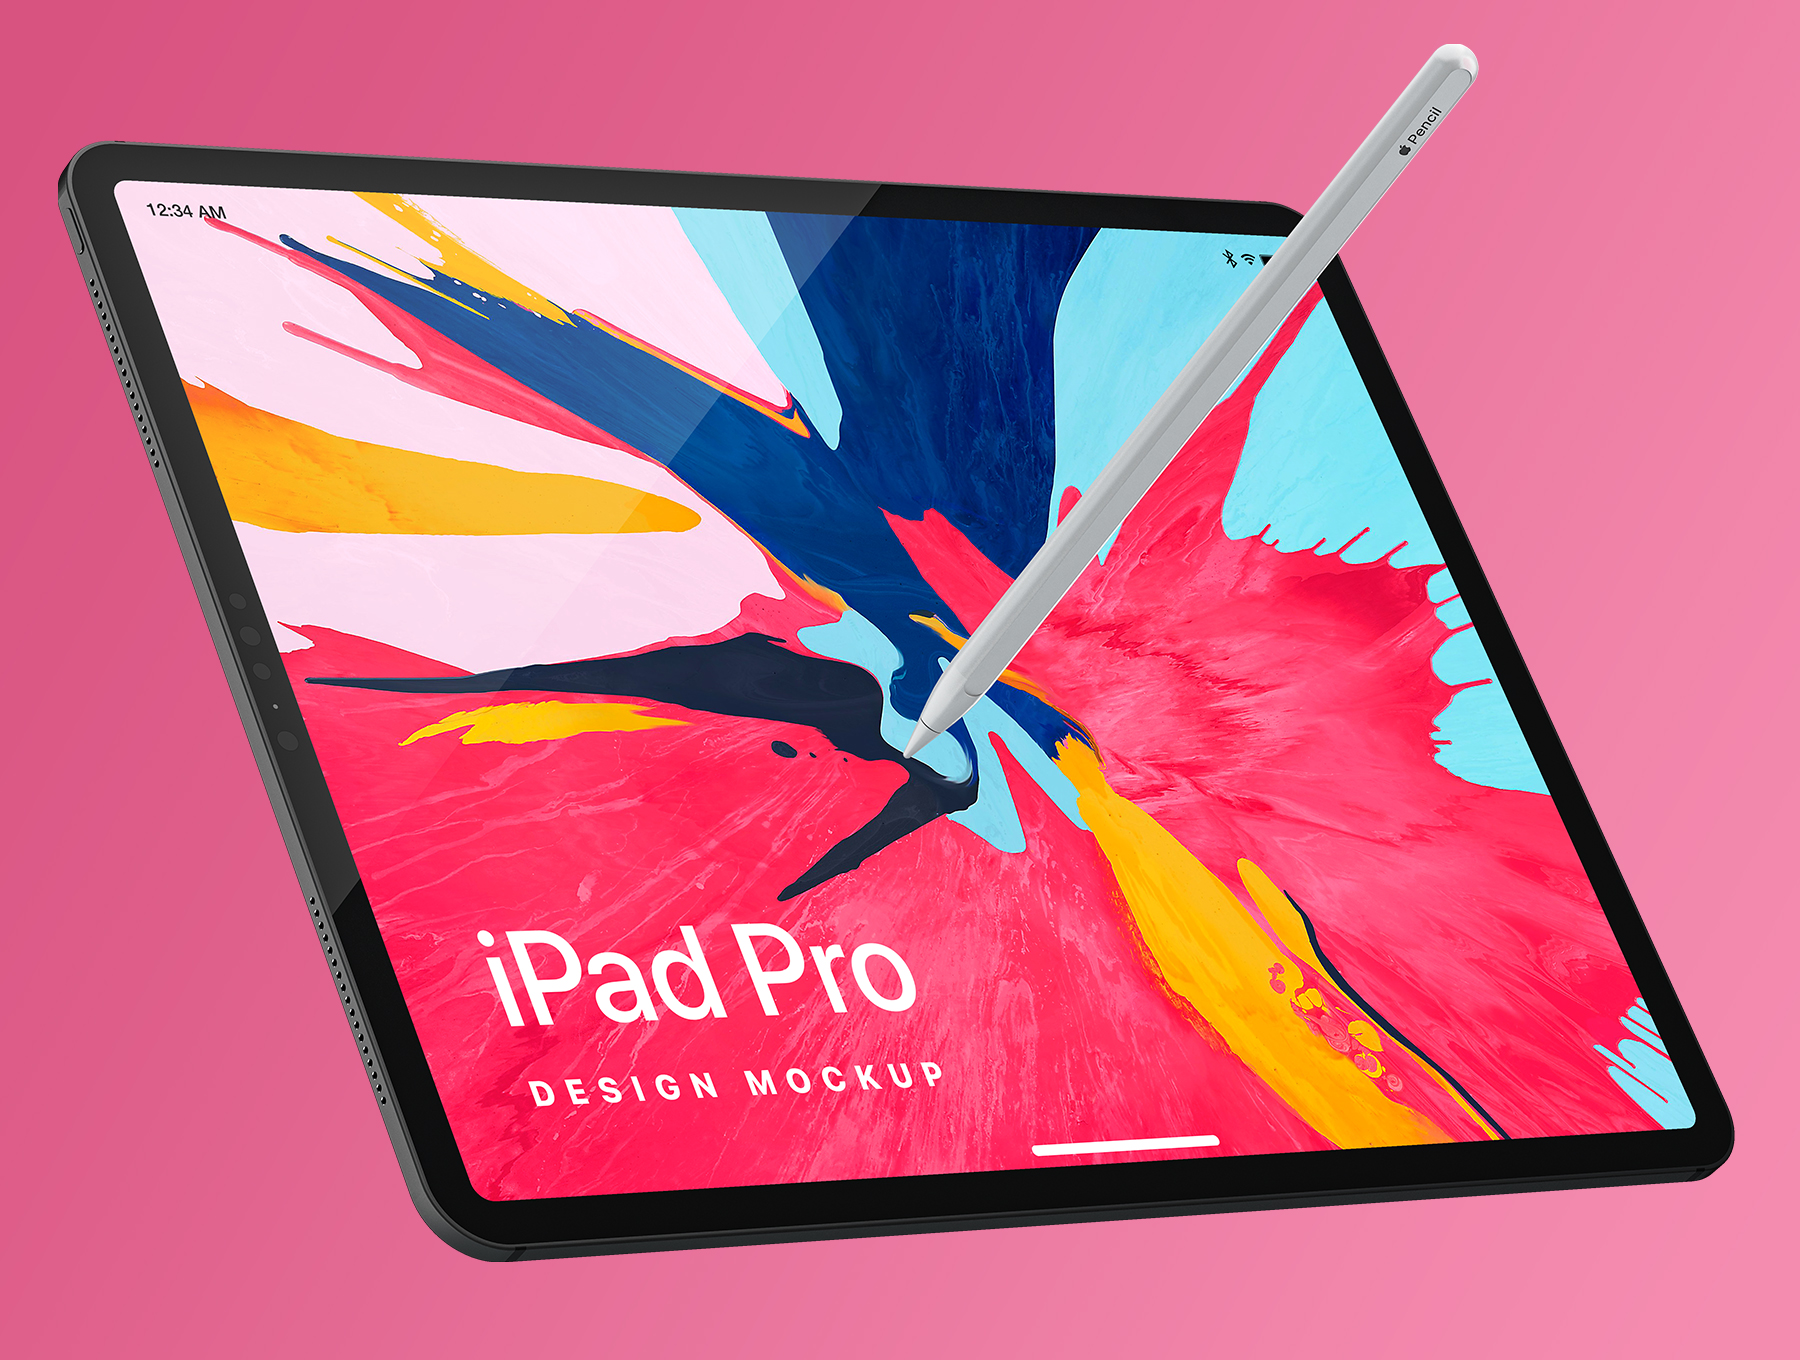 iPad Pro 绘画展示样机iPad Pro Design